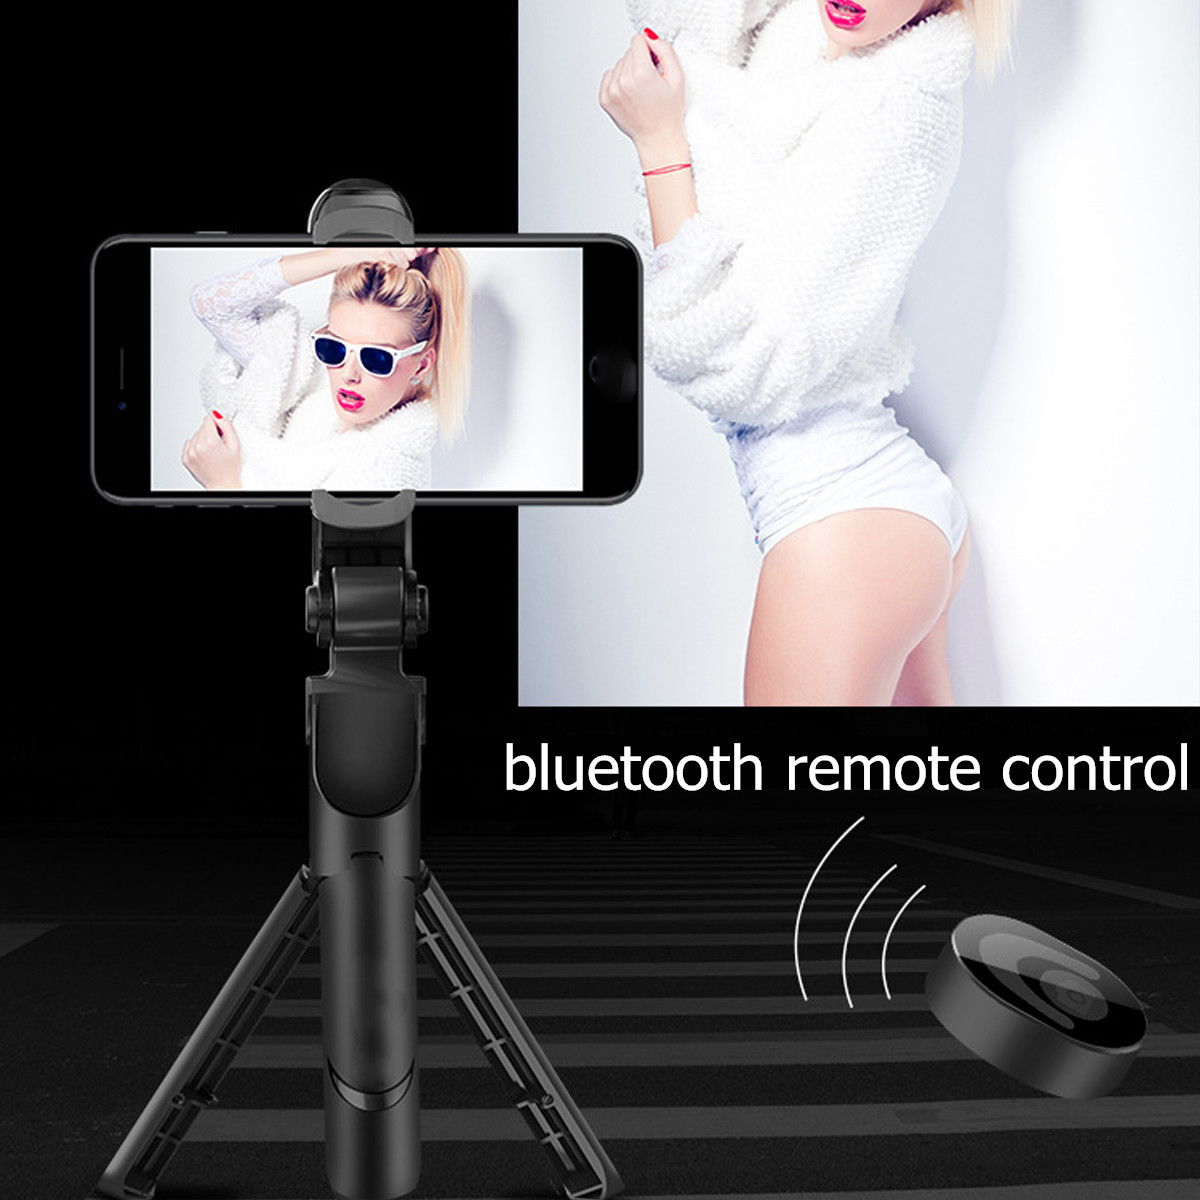 Bakeey-360-Degree-Selfie-Stick-Tripod-Desktop-Phone-Holder-with-bluetooth-Remote-Control-1293454-7